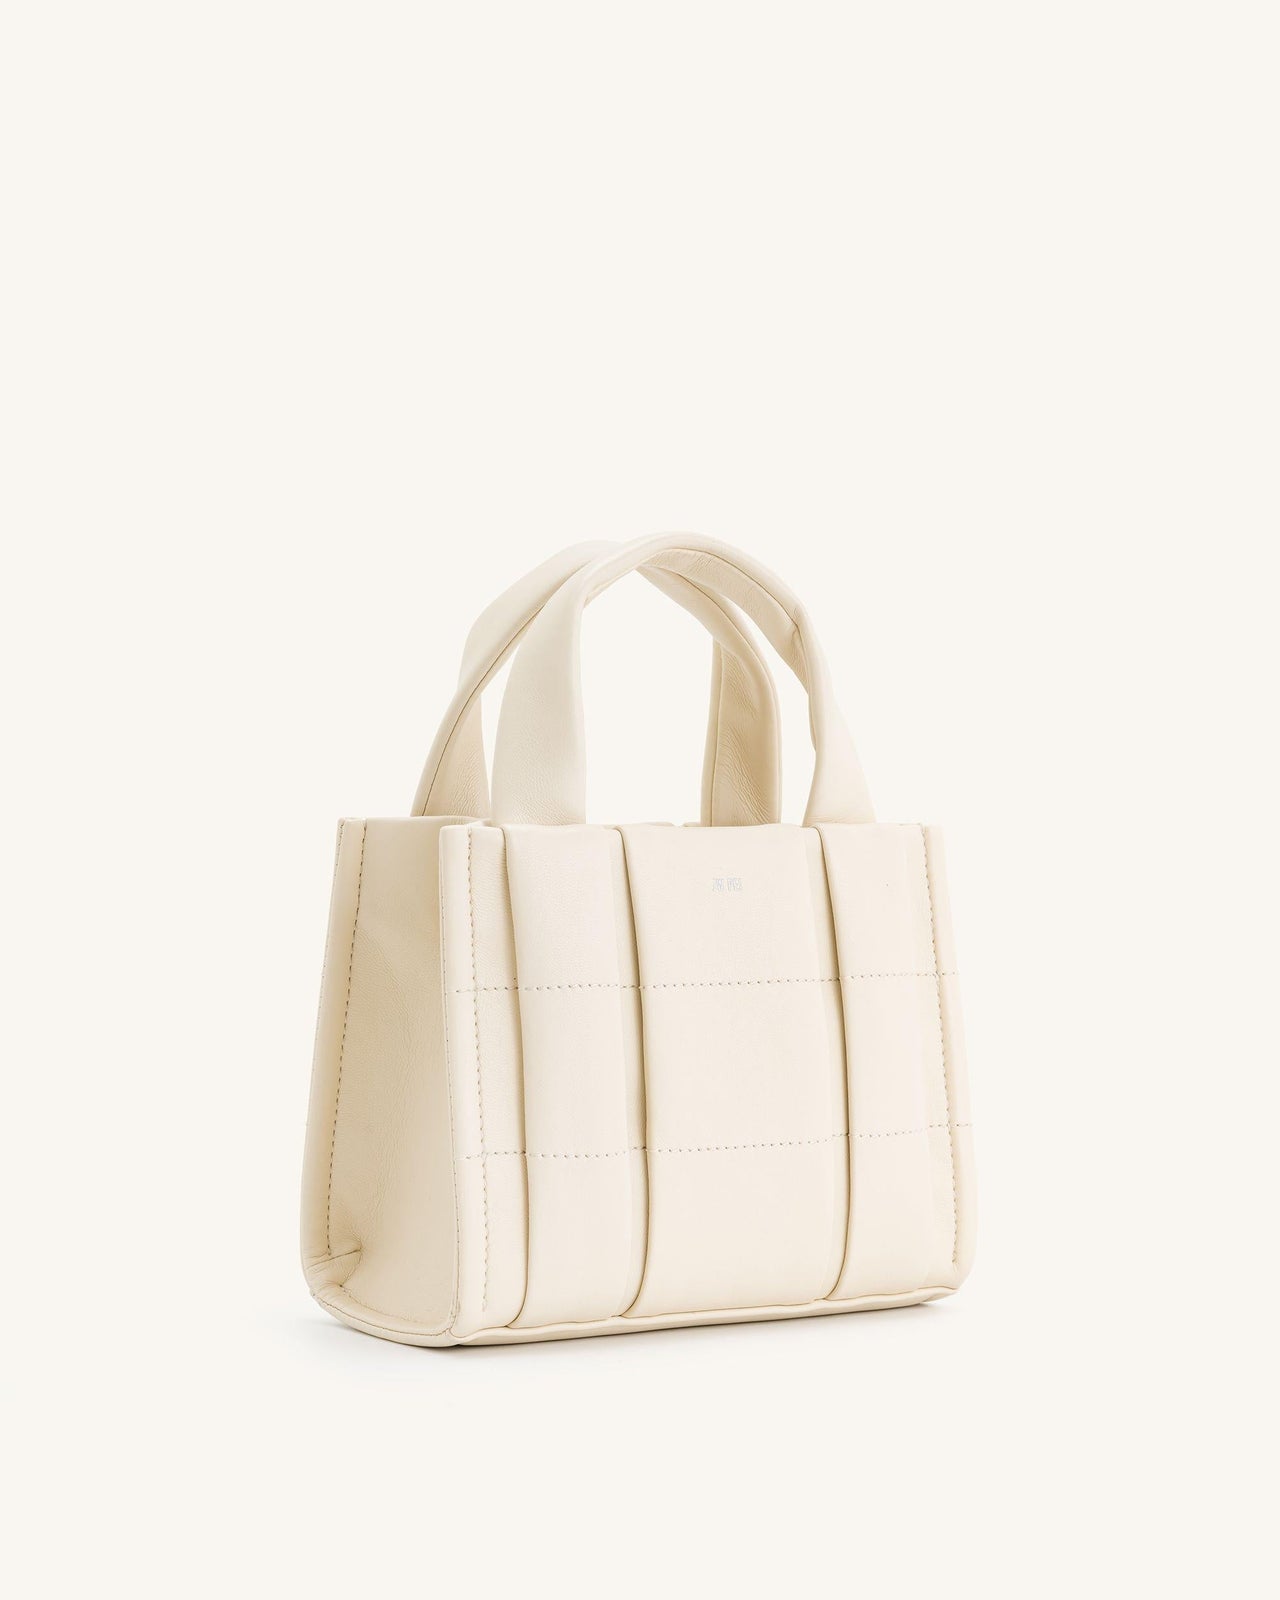 Mini sac cabas Freya - Blanc